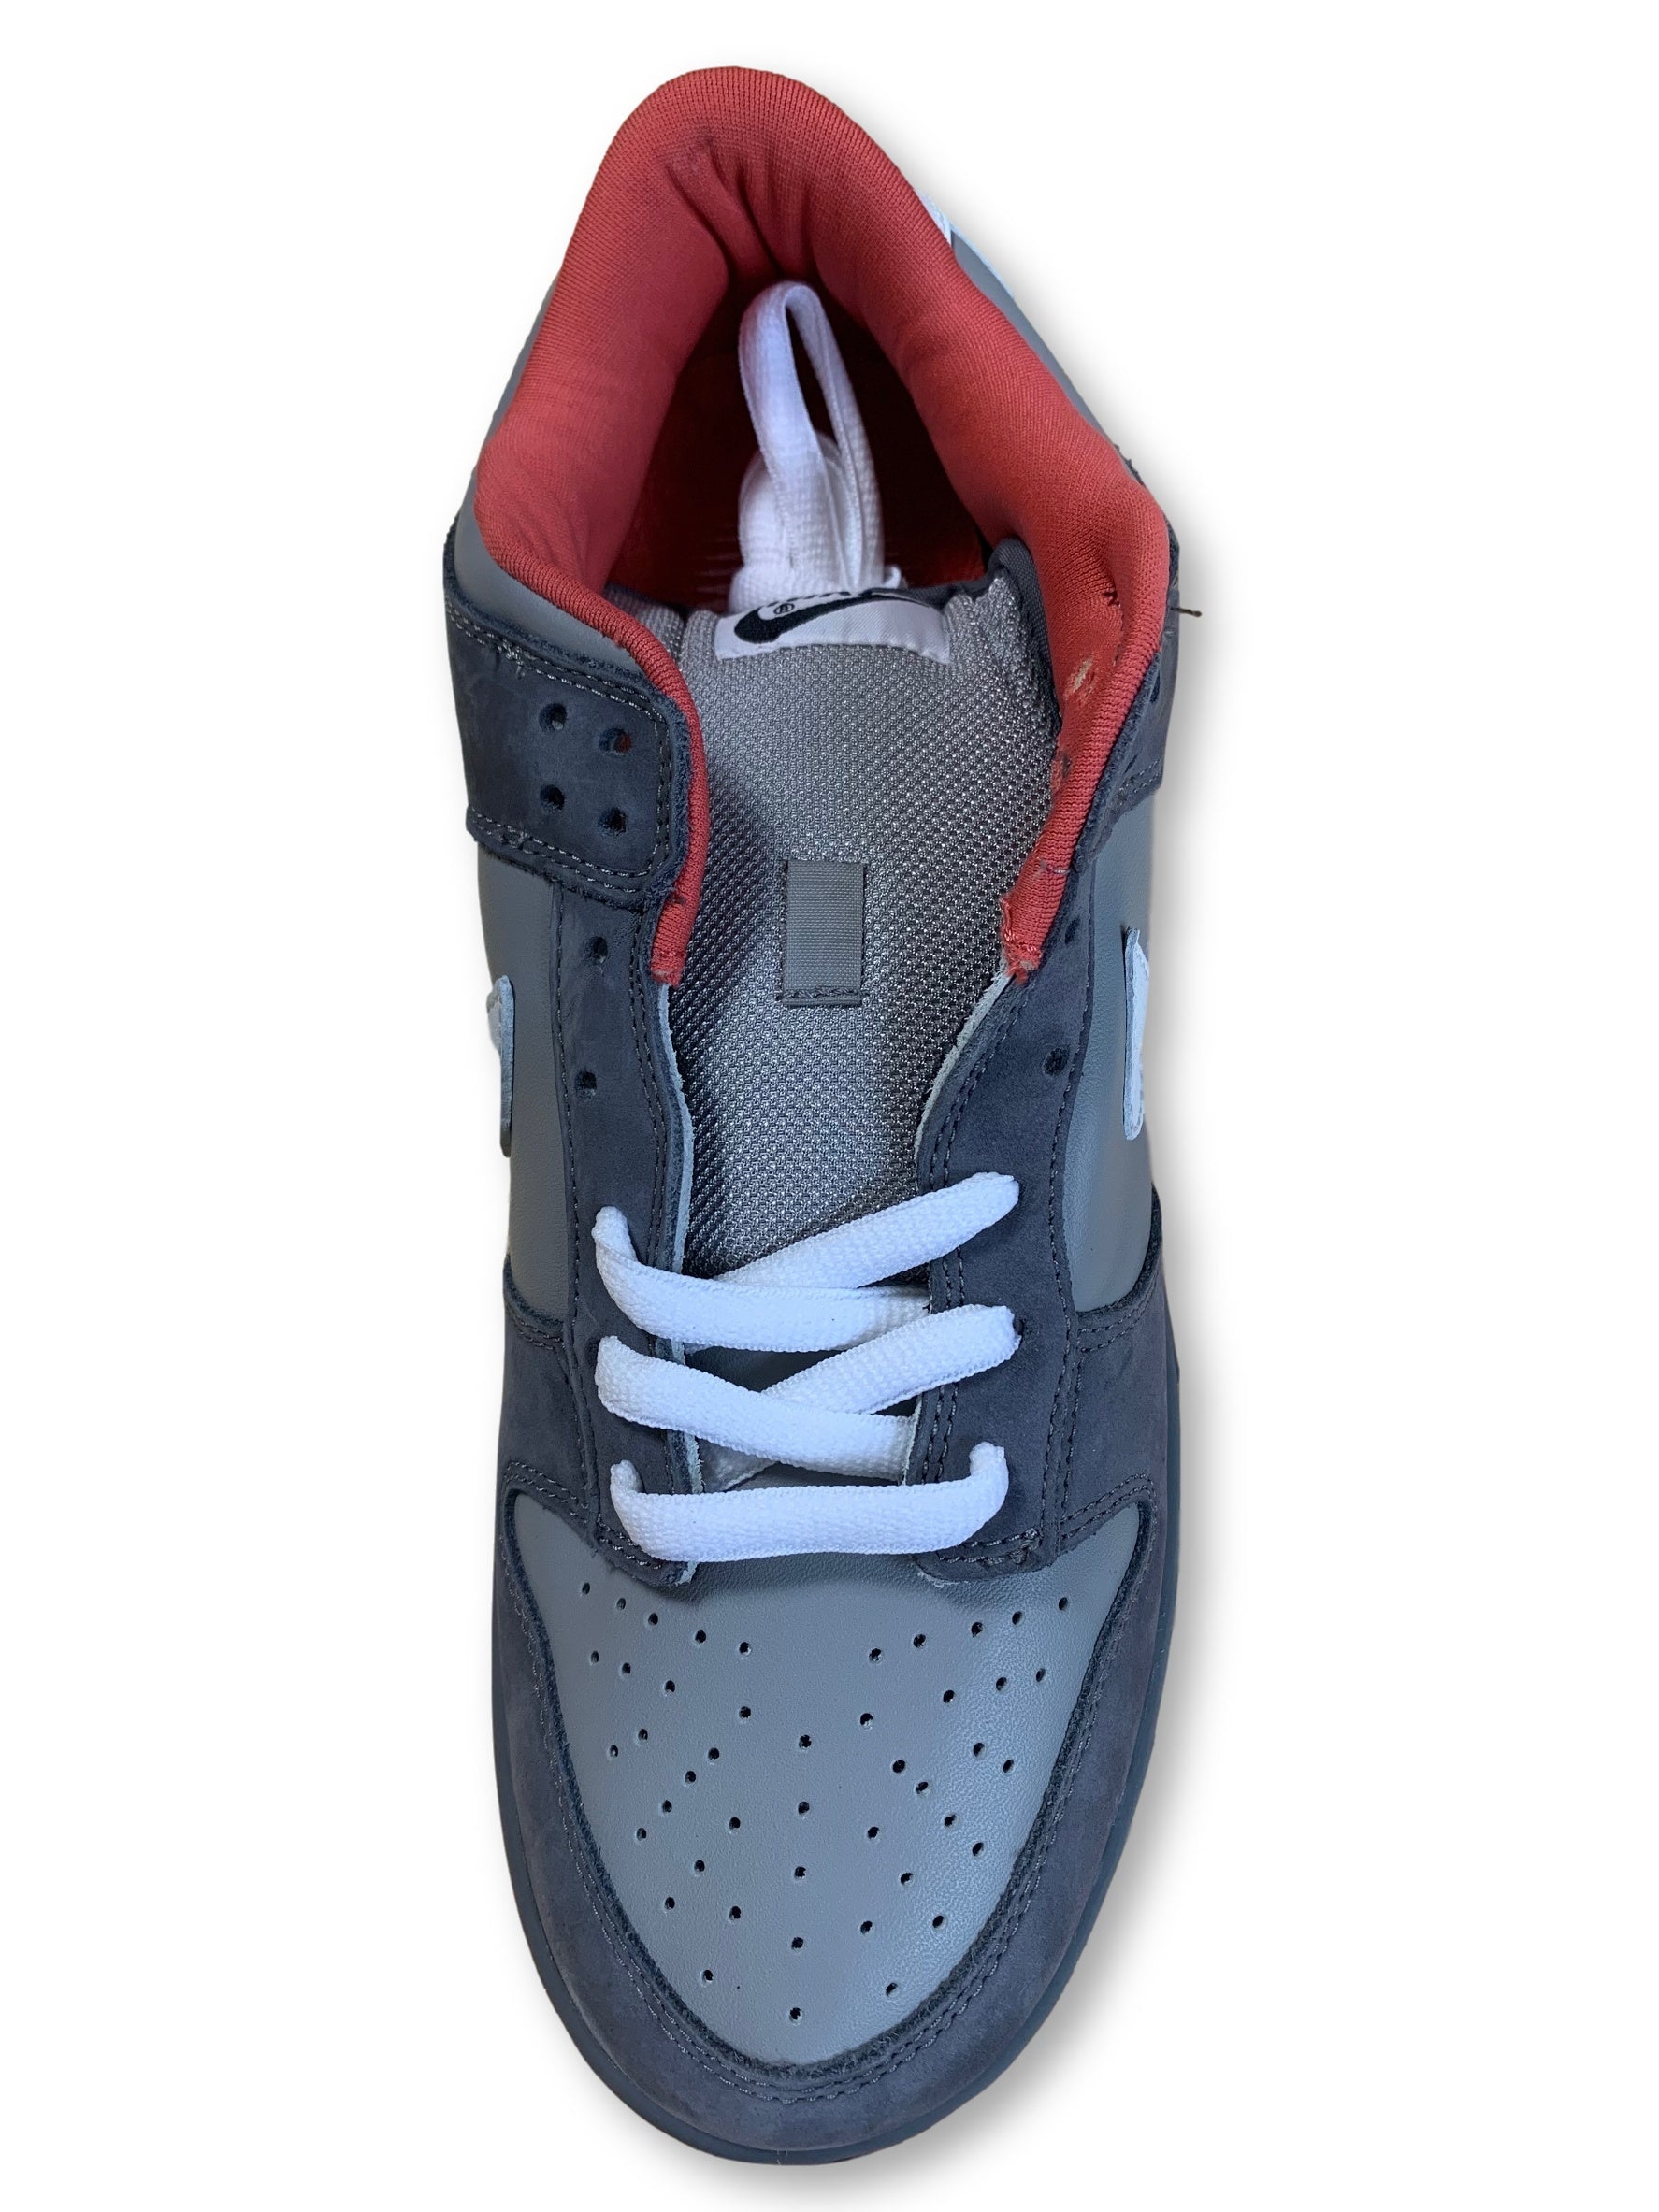 Nike Dunk Low Pro SB Staple "Pigeon" - Size 10 - NEW